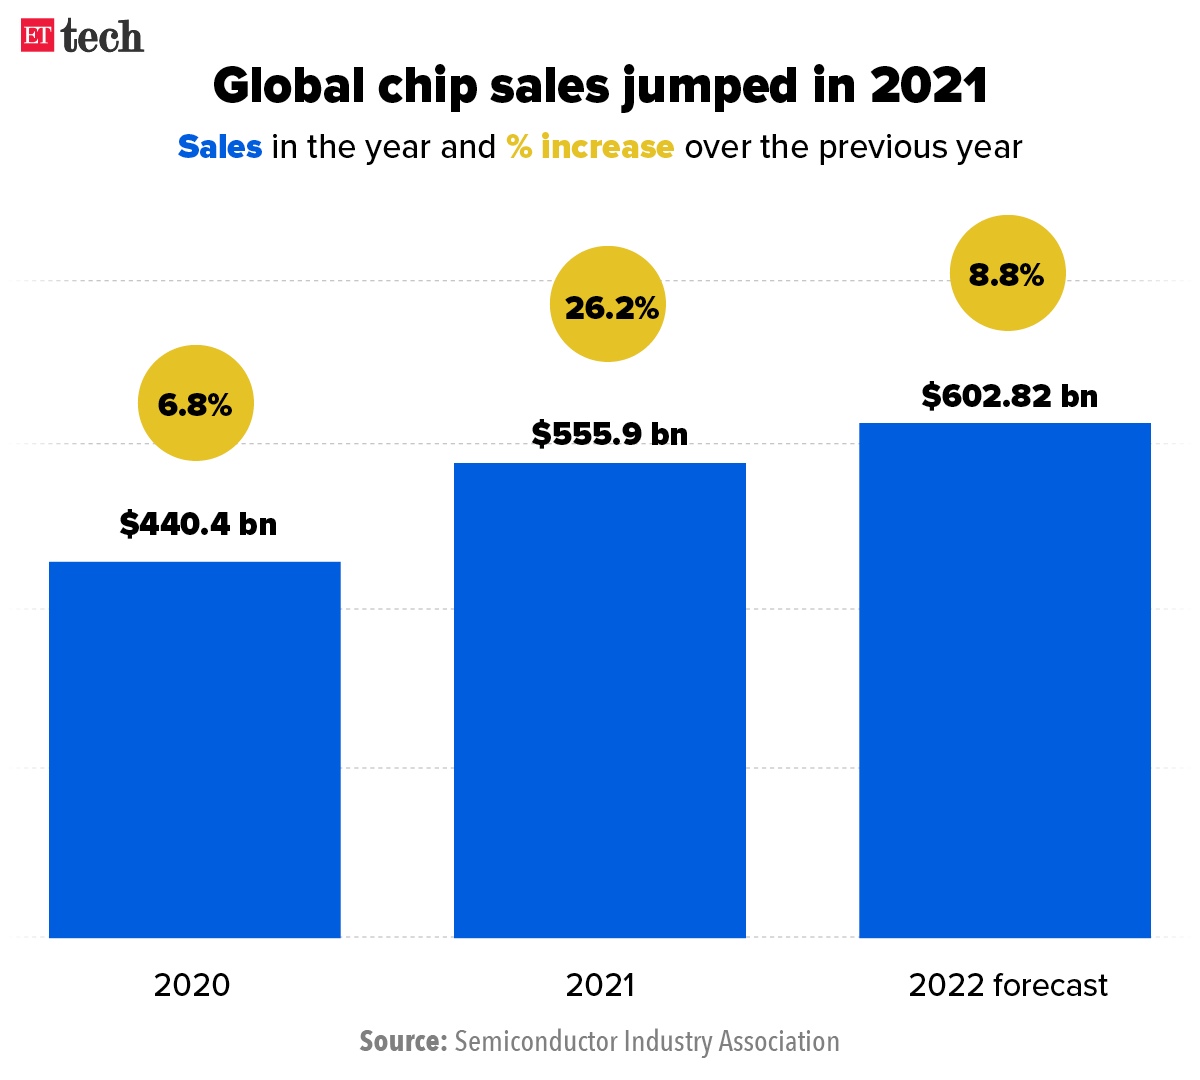 Global chip sales